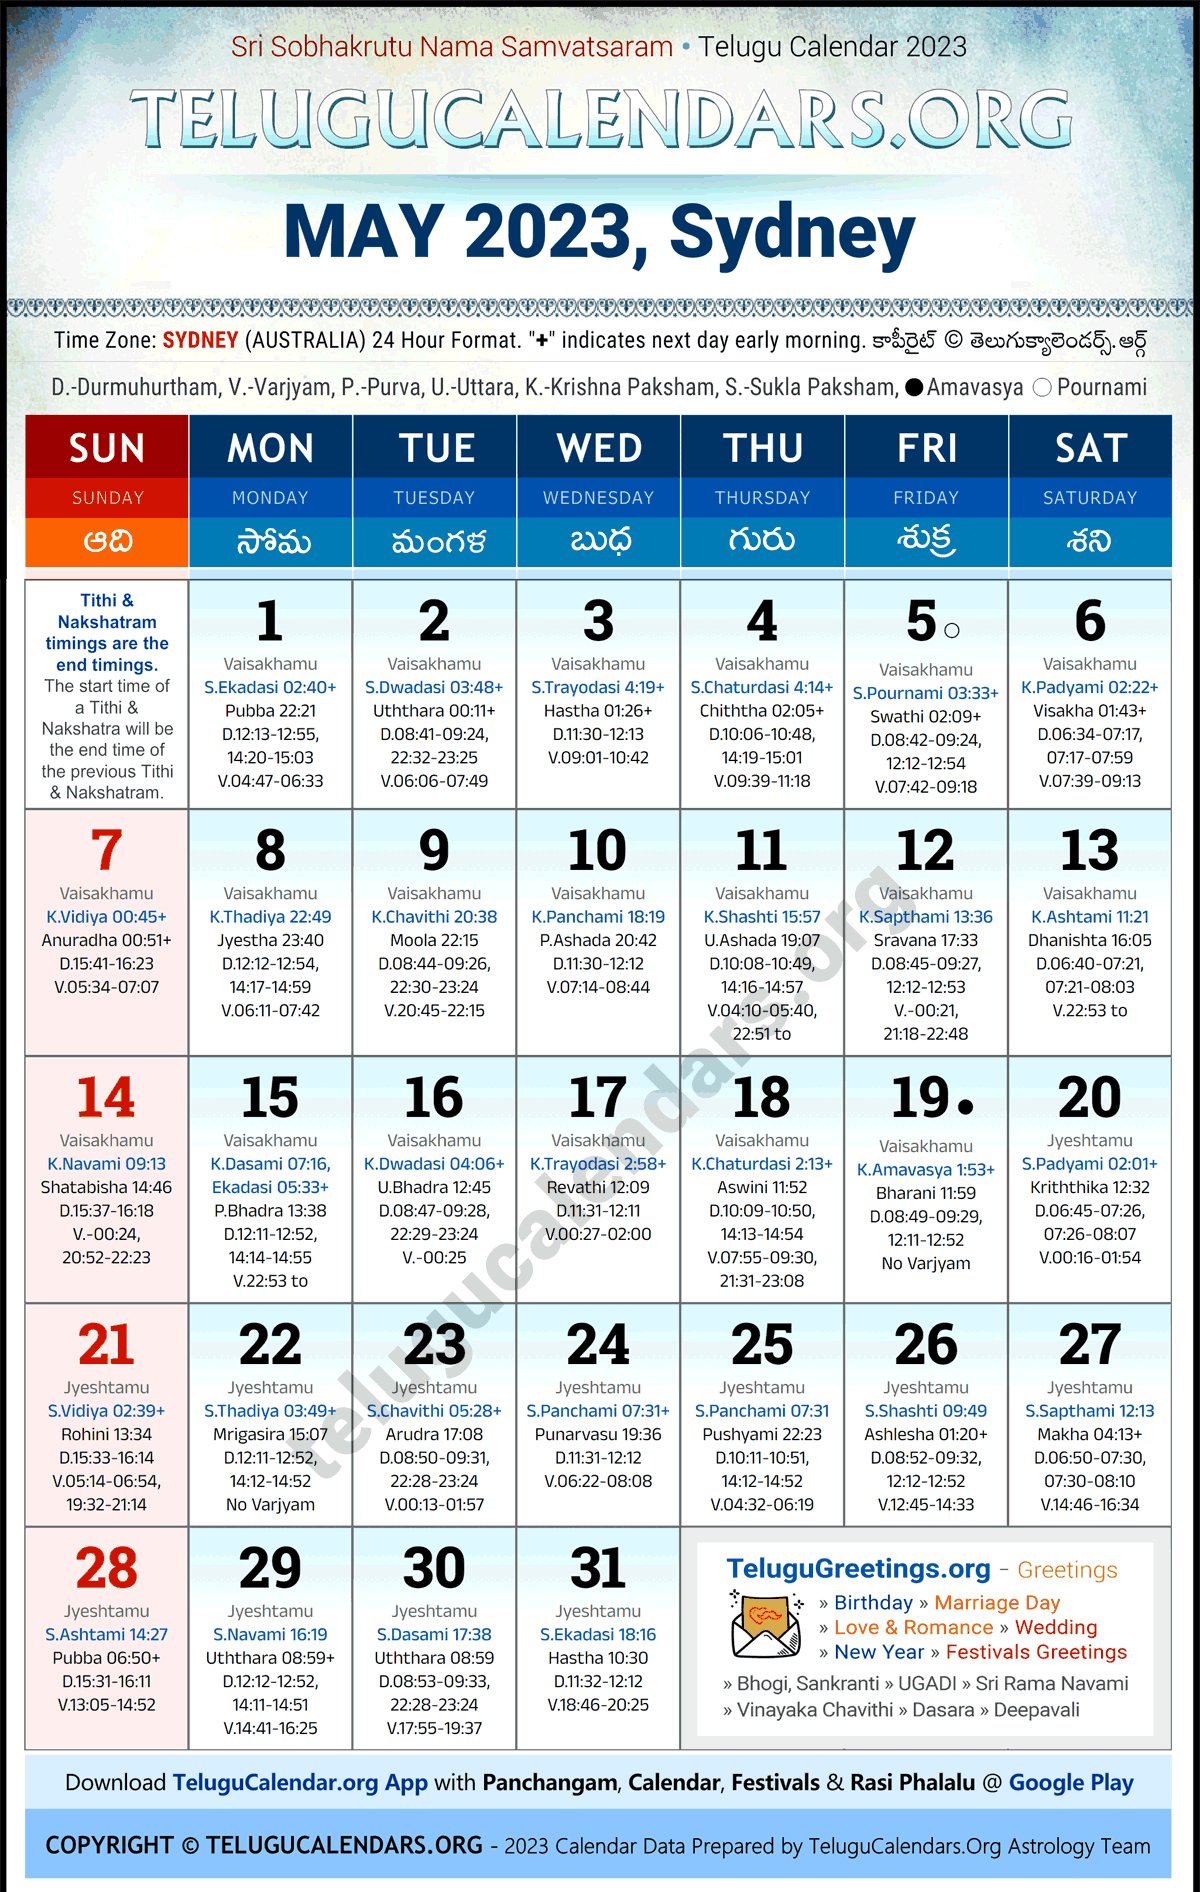 Telugu Calendar 2023 May Festivals for Sydney